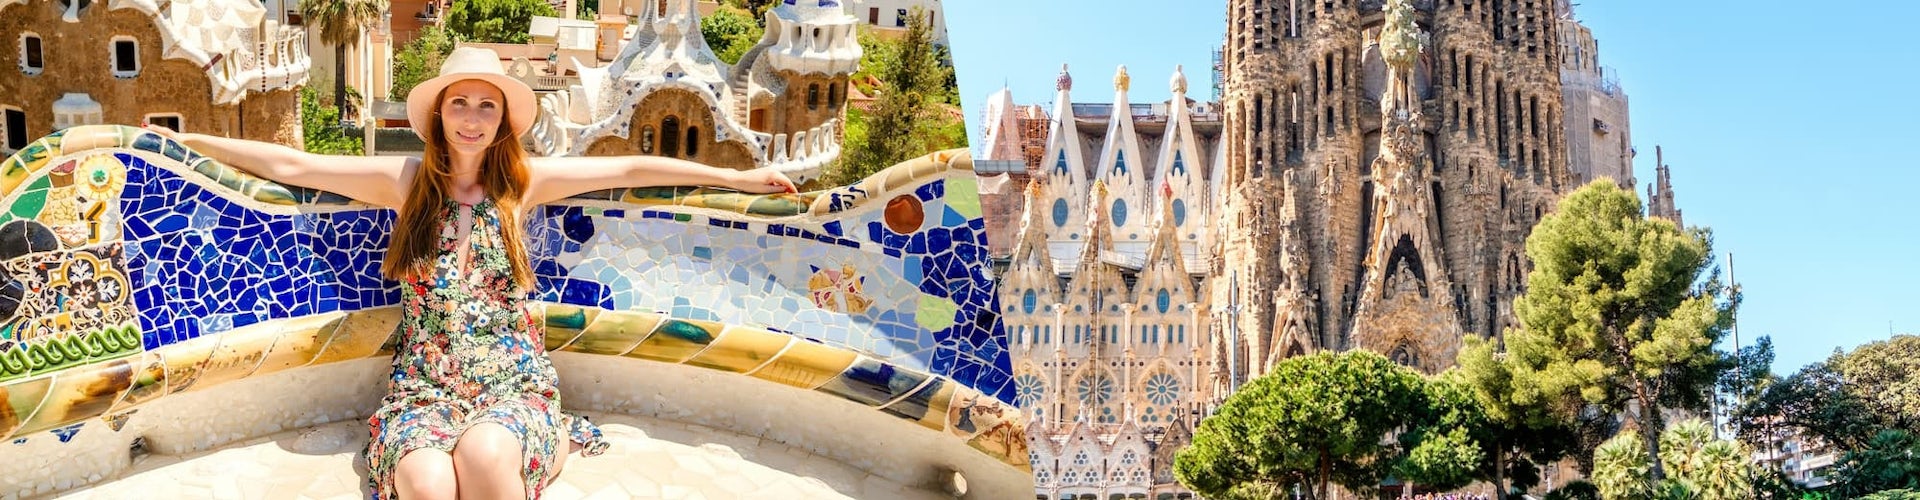 Barcelona Tour Gaudi